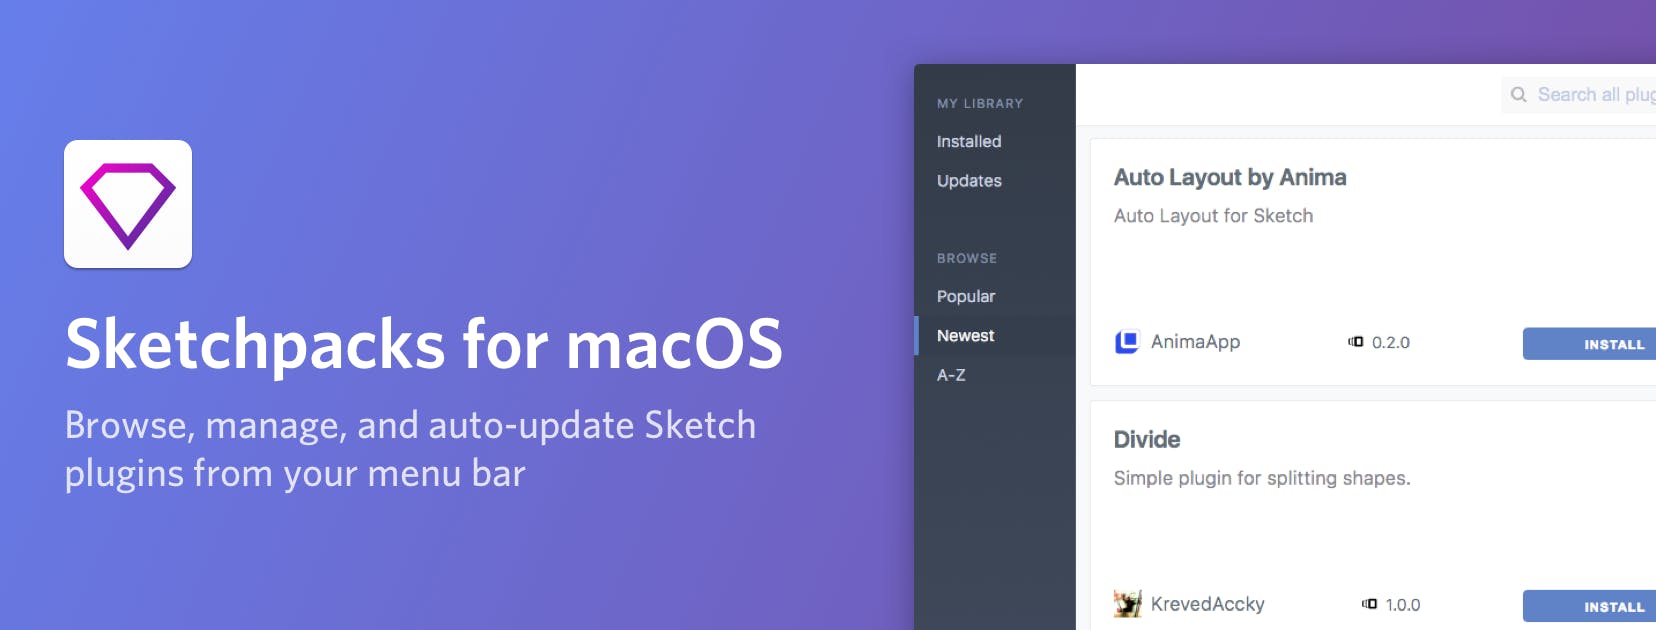 Sketchpacks for macOS media 1